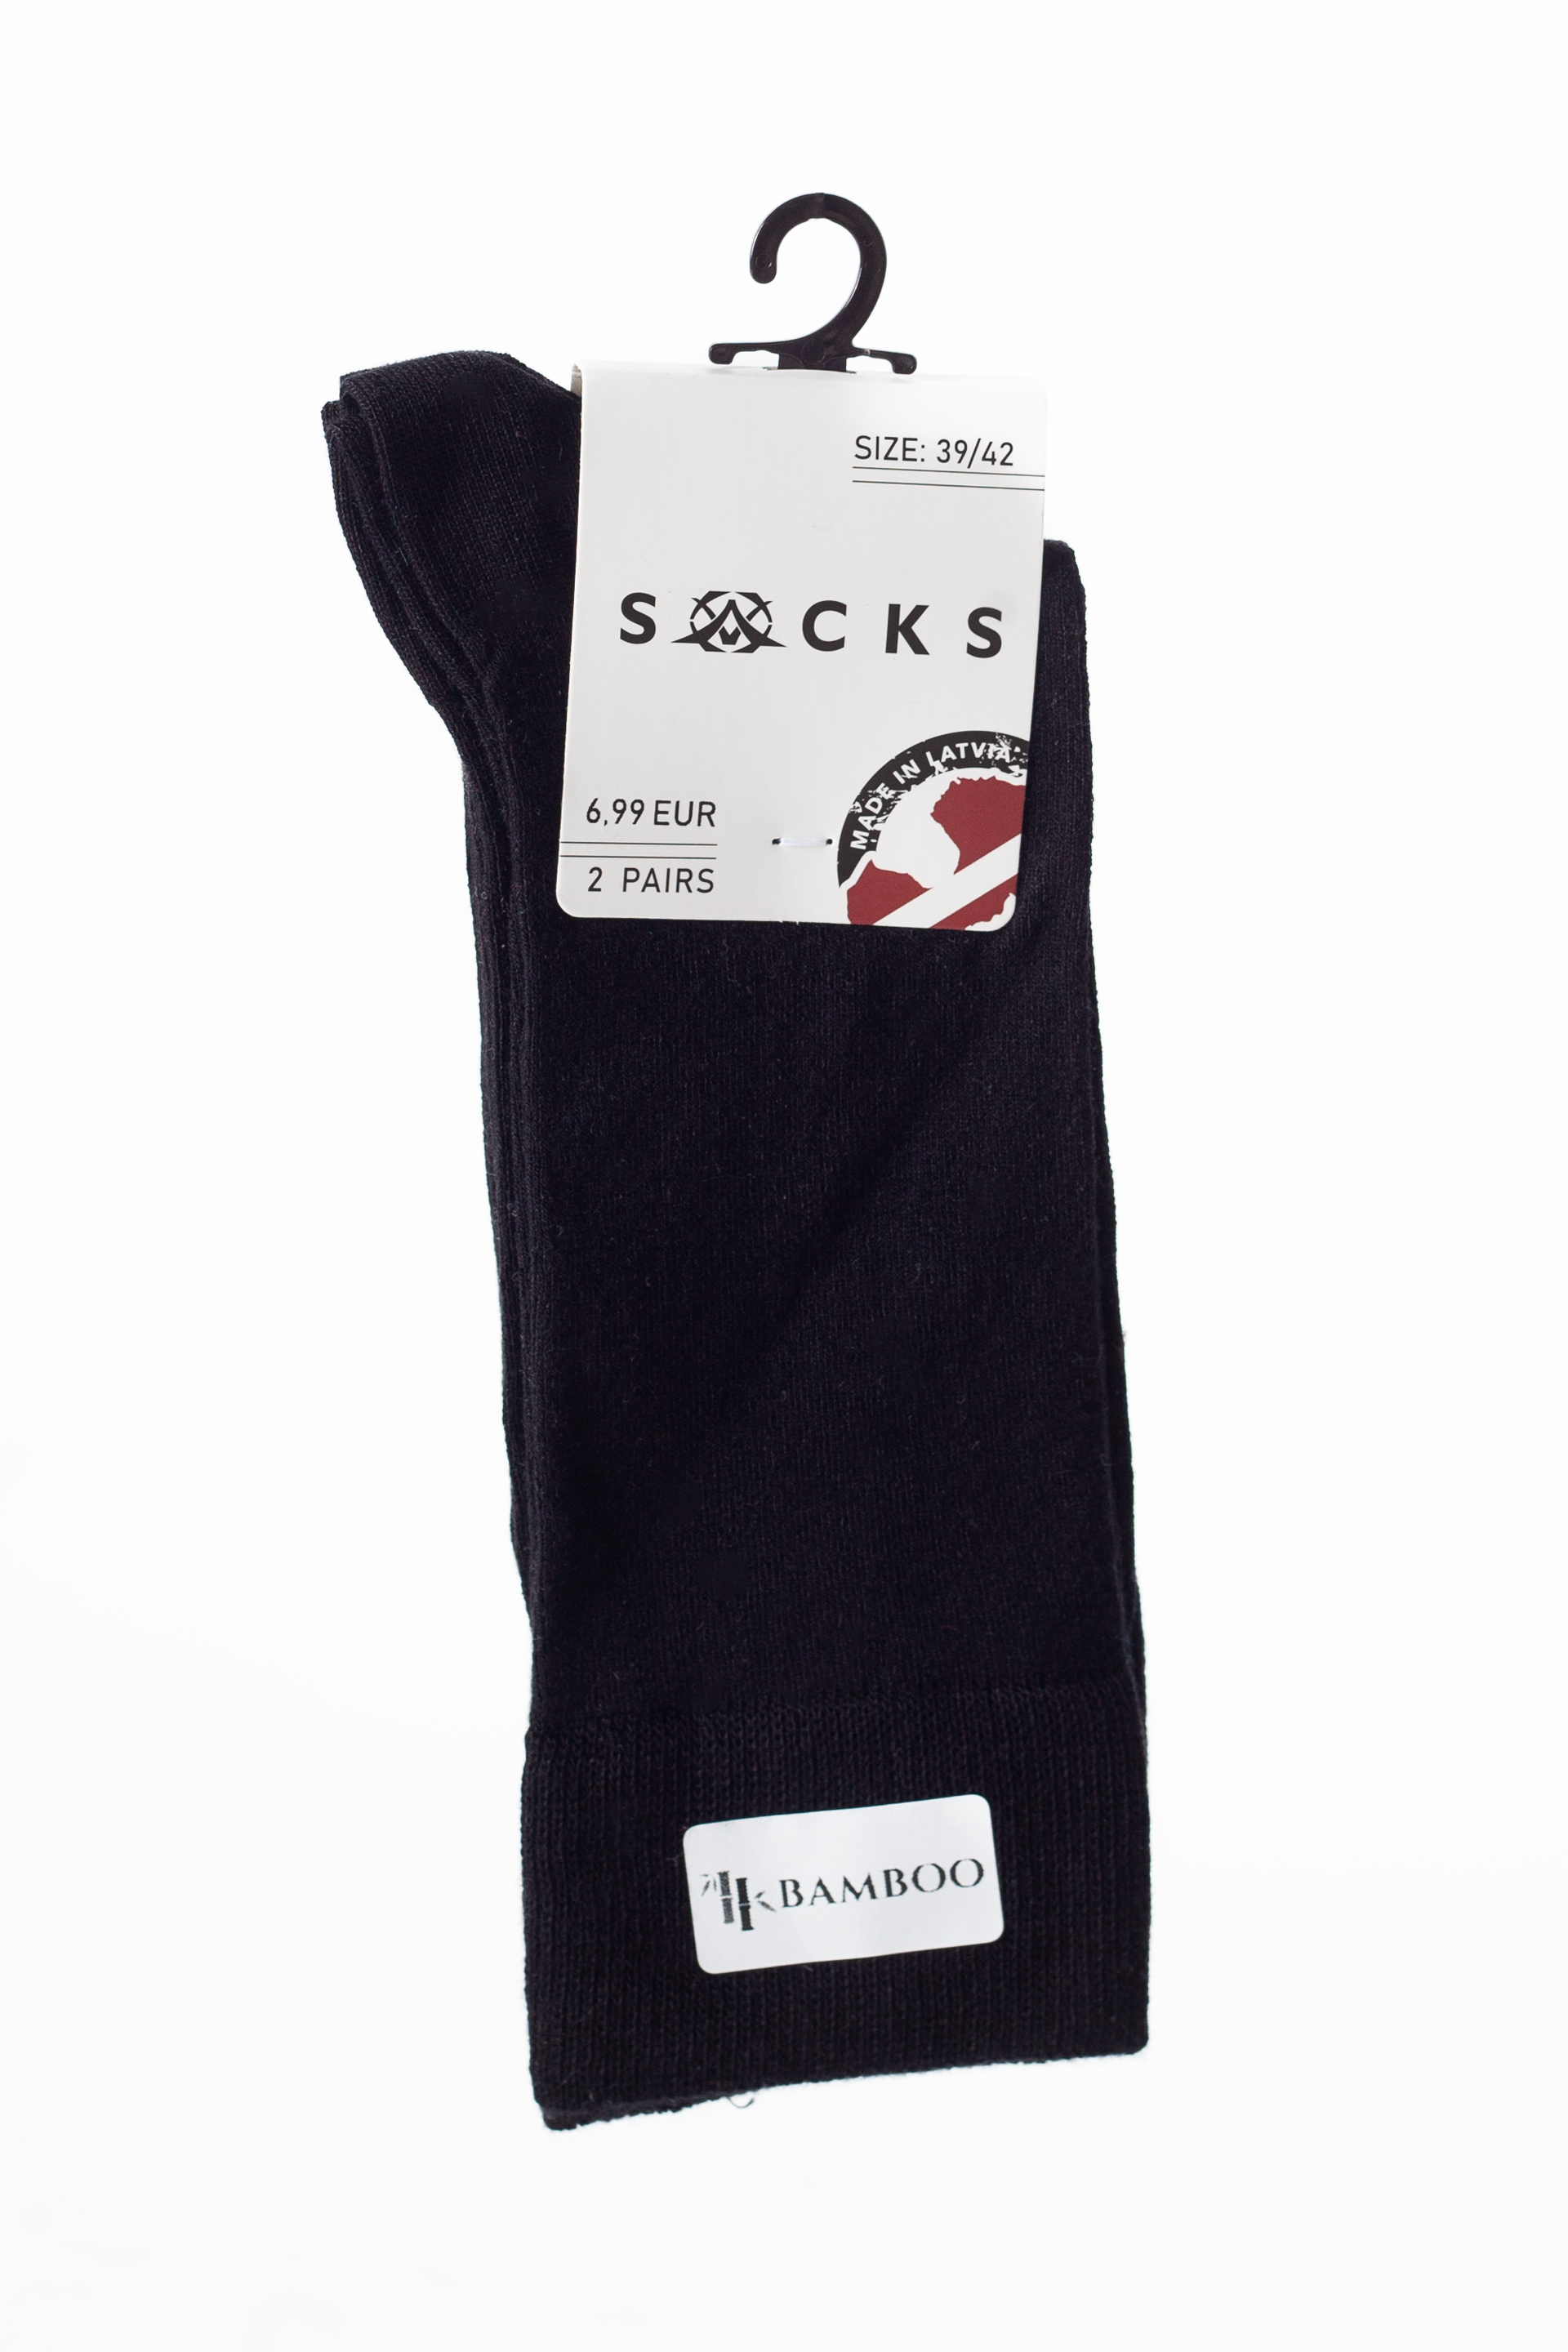 Socken X JEANS 10A15-2P-BLACK